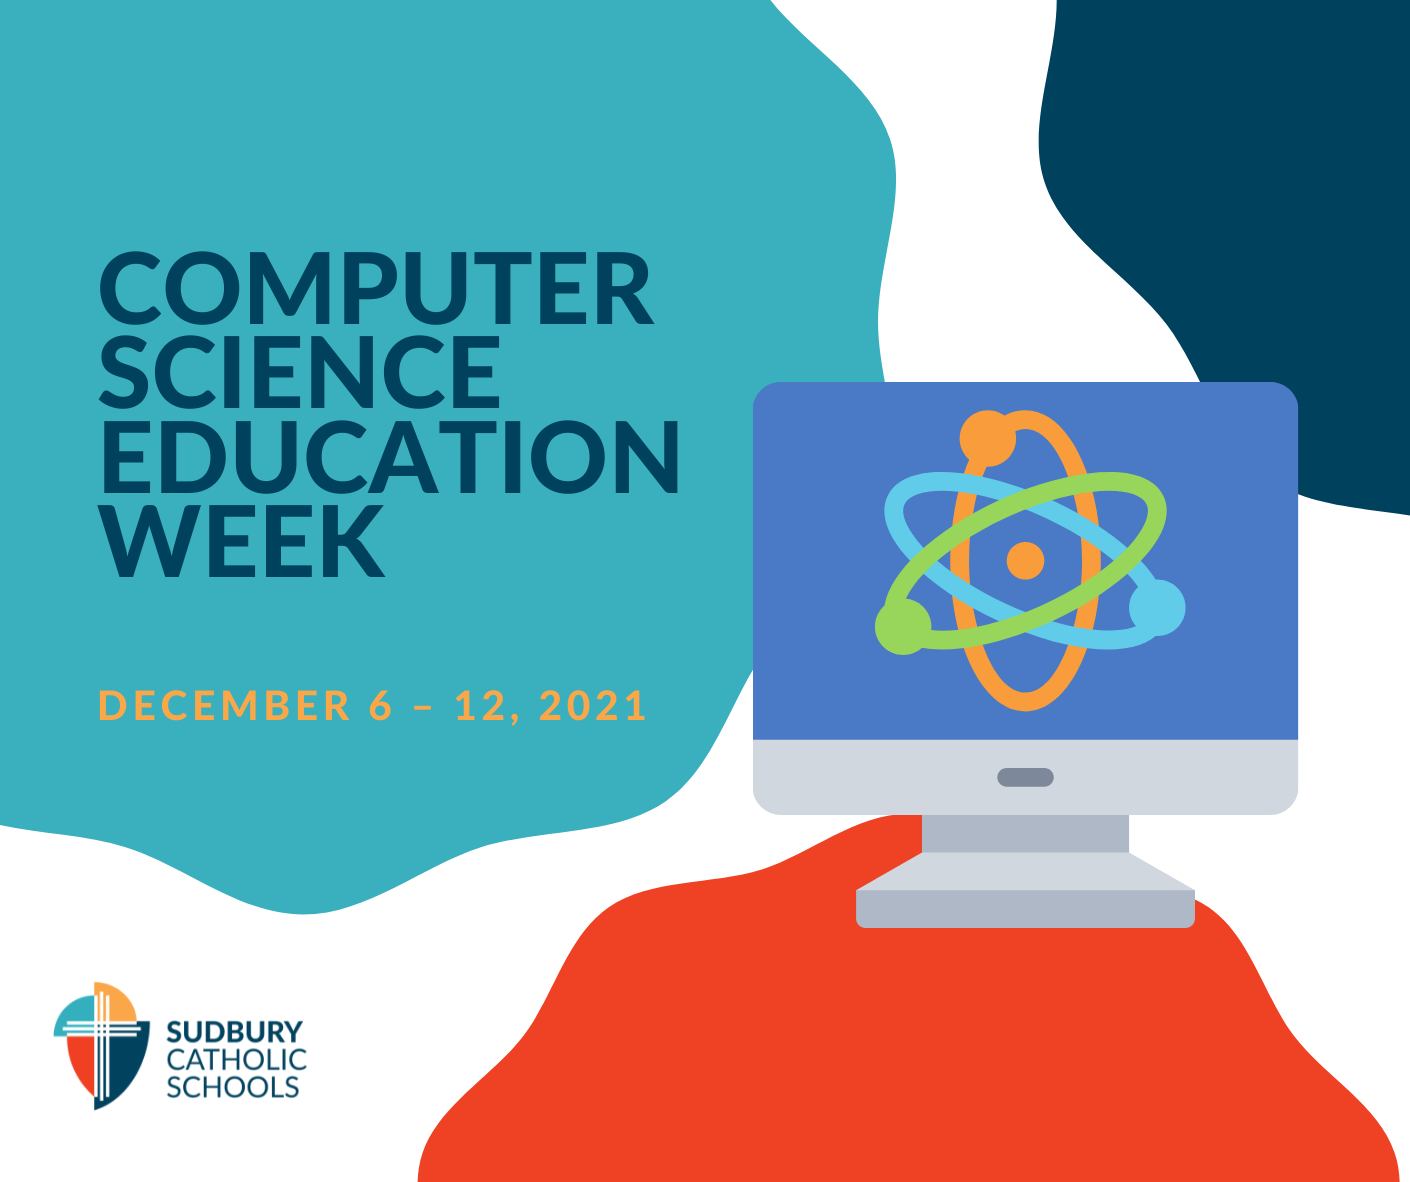 SCDSB Highlights IT Staff As Part of Computer Science Education Week at Sudbury Catholic Schools